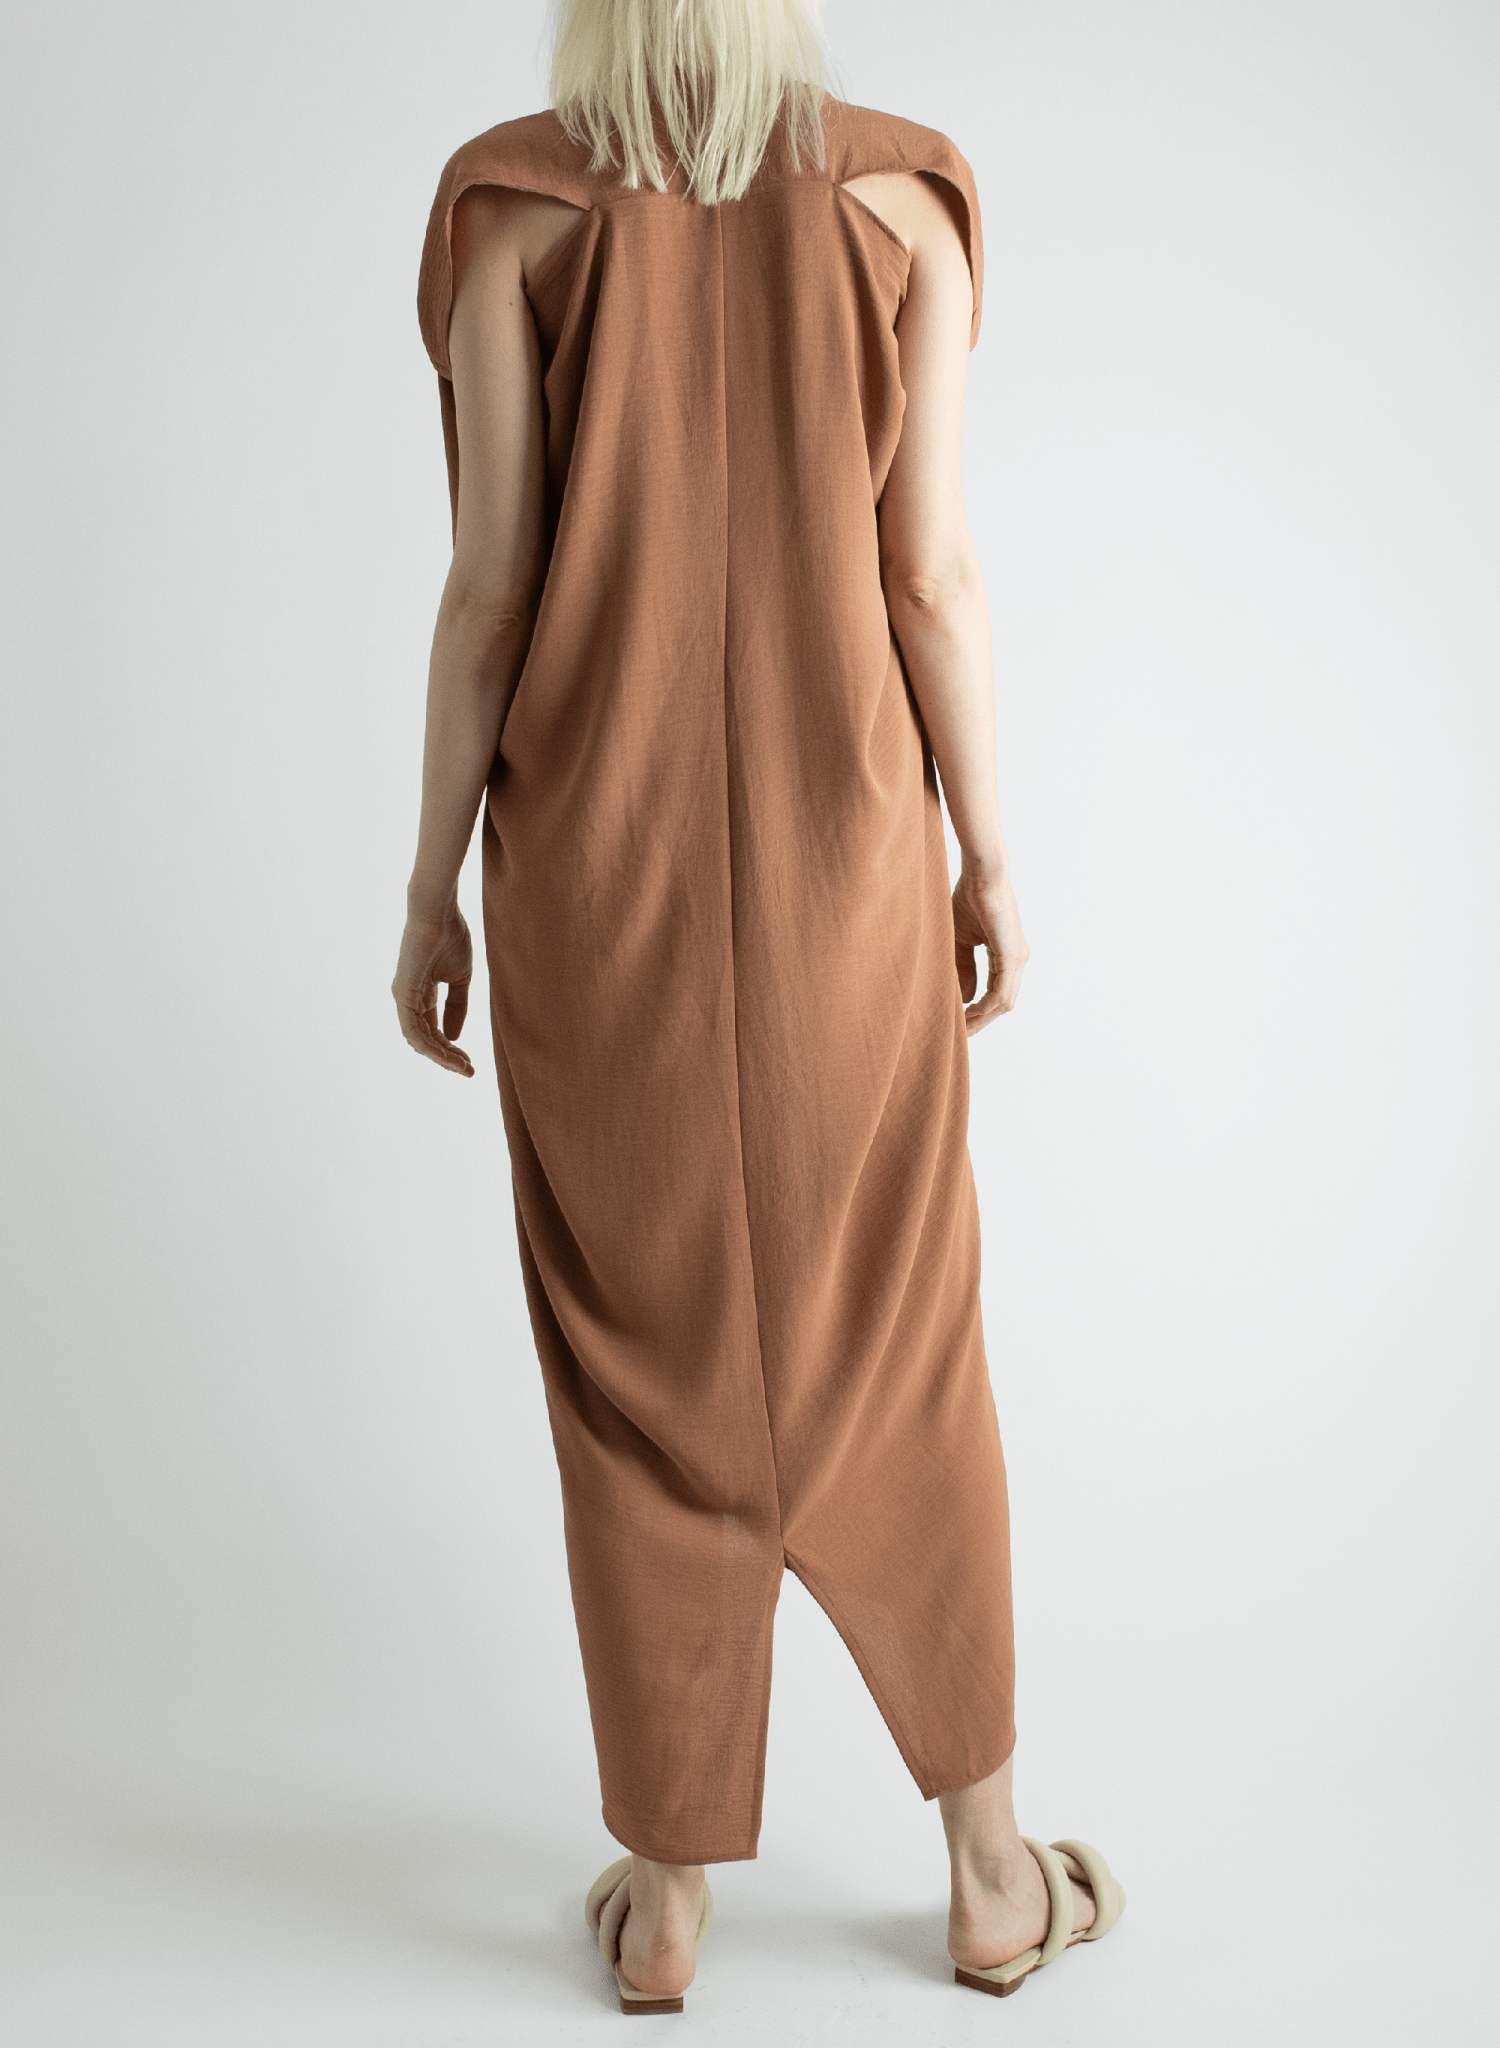 Abstraction Dress - Latte - Meg